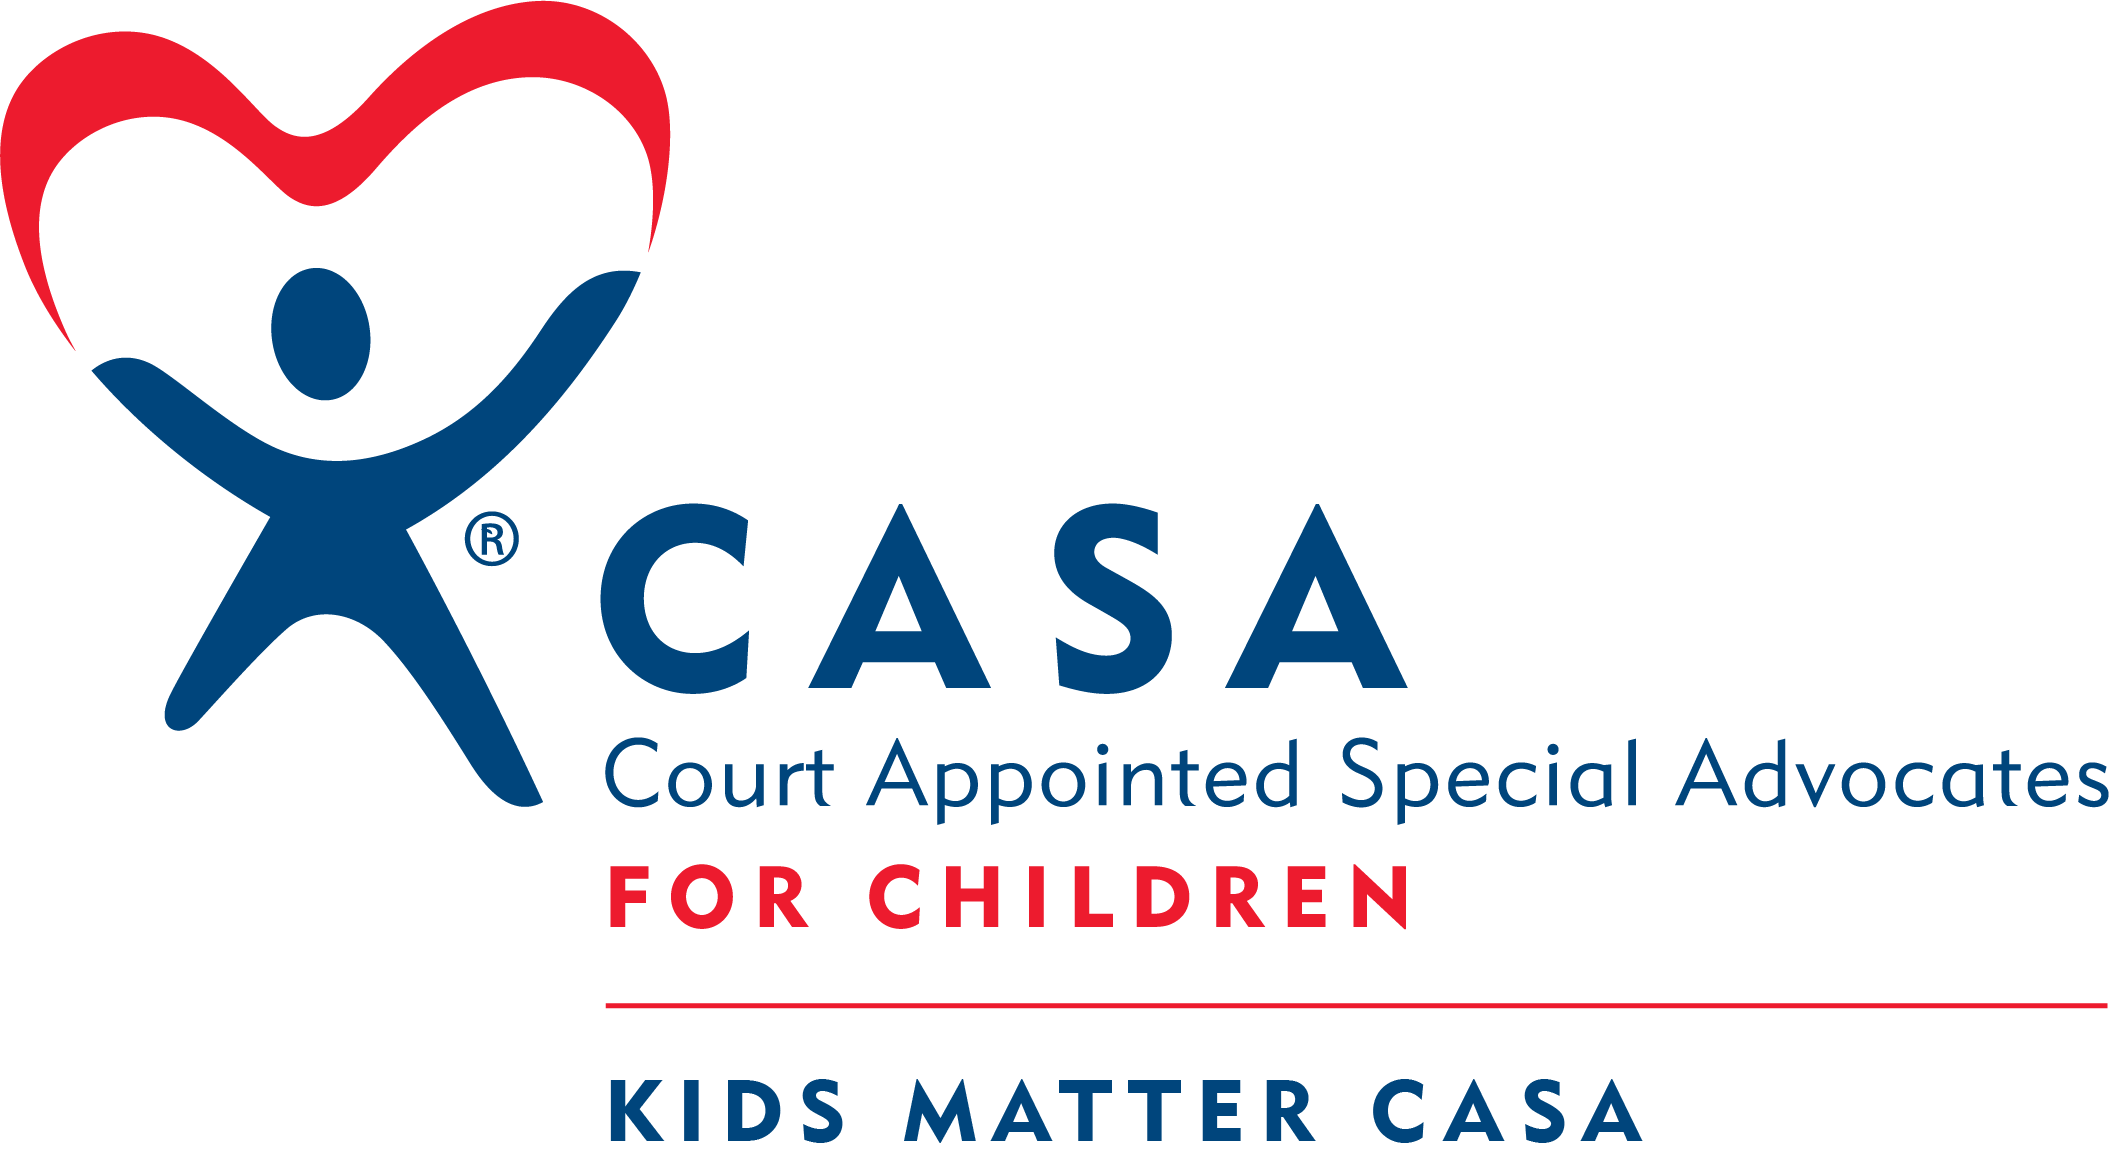 About Us - National CASA/GAL Association for Children